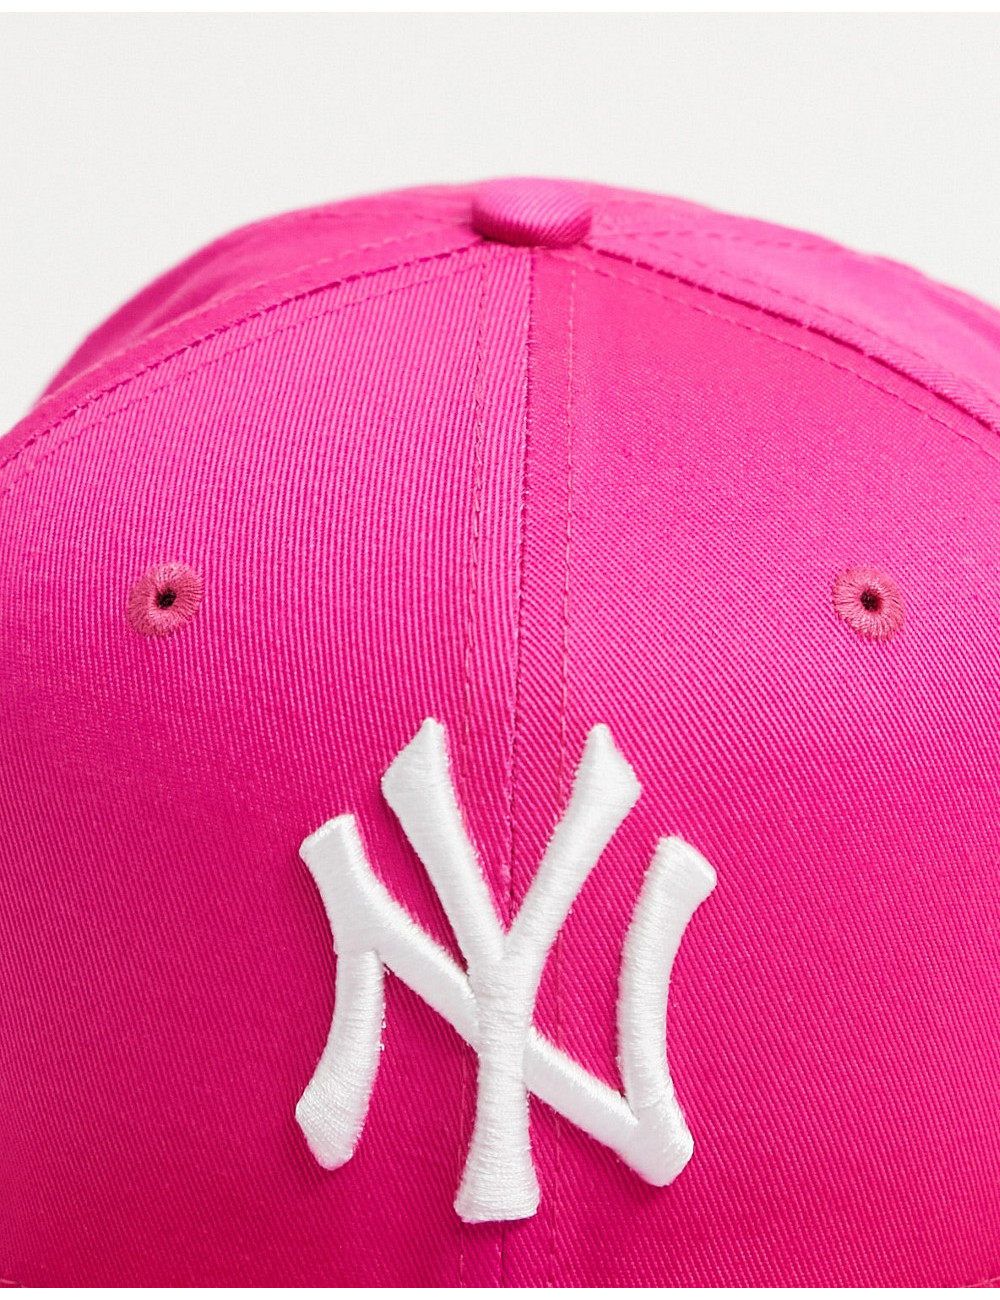 New Era 950 cap in pink